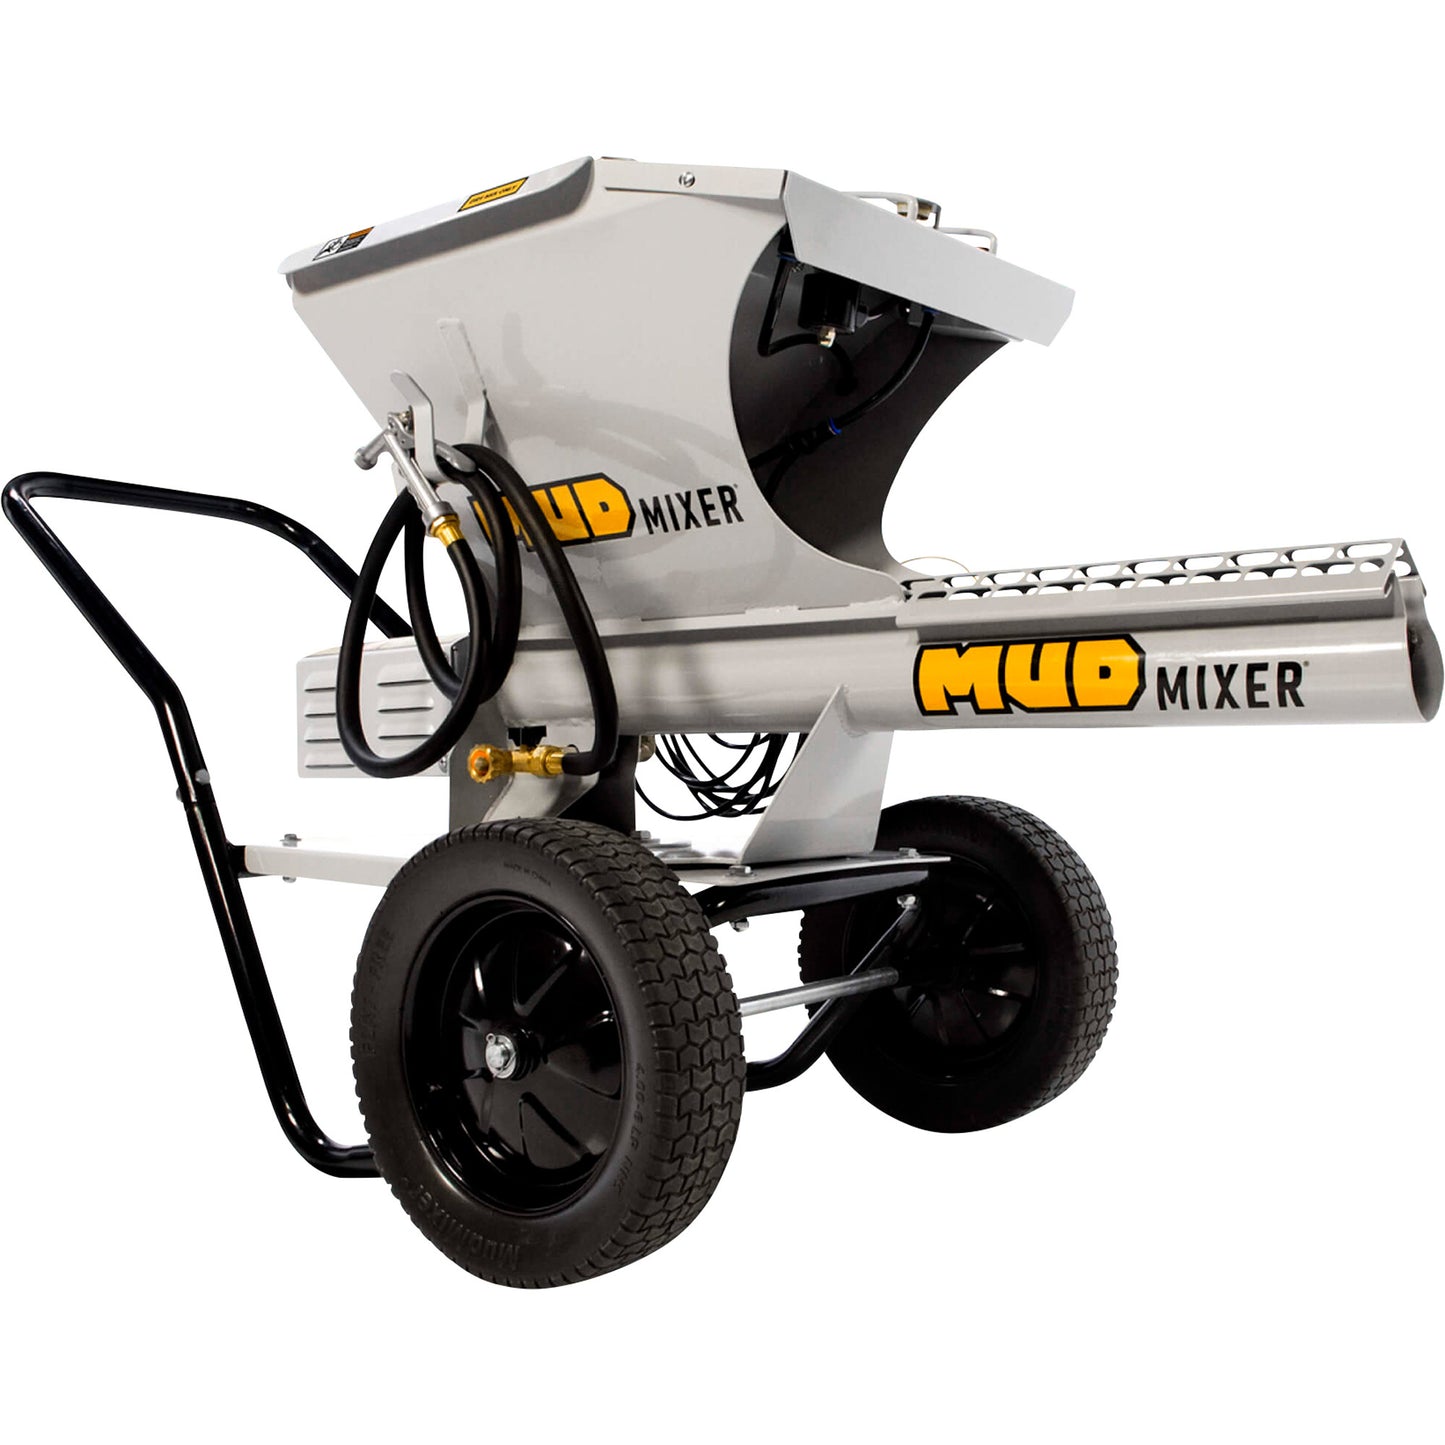 MudMixer™ (MMXR-3221)